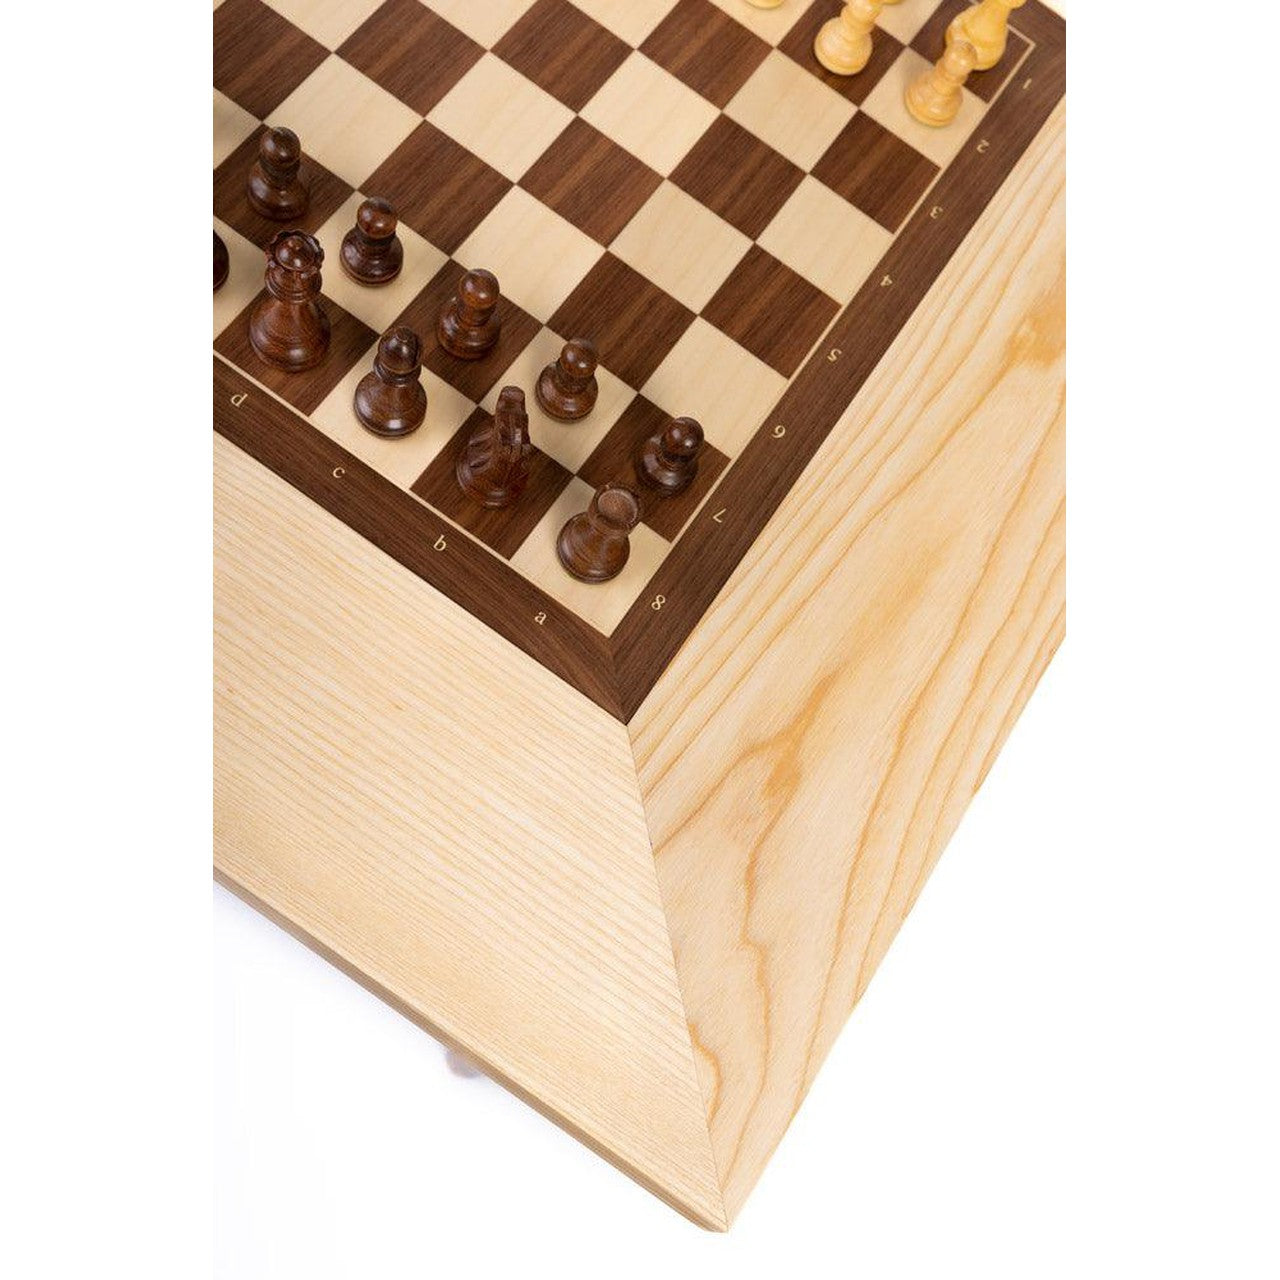 Chess Table Ash Wood